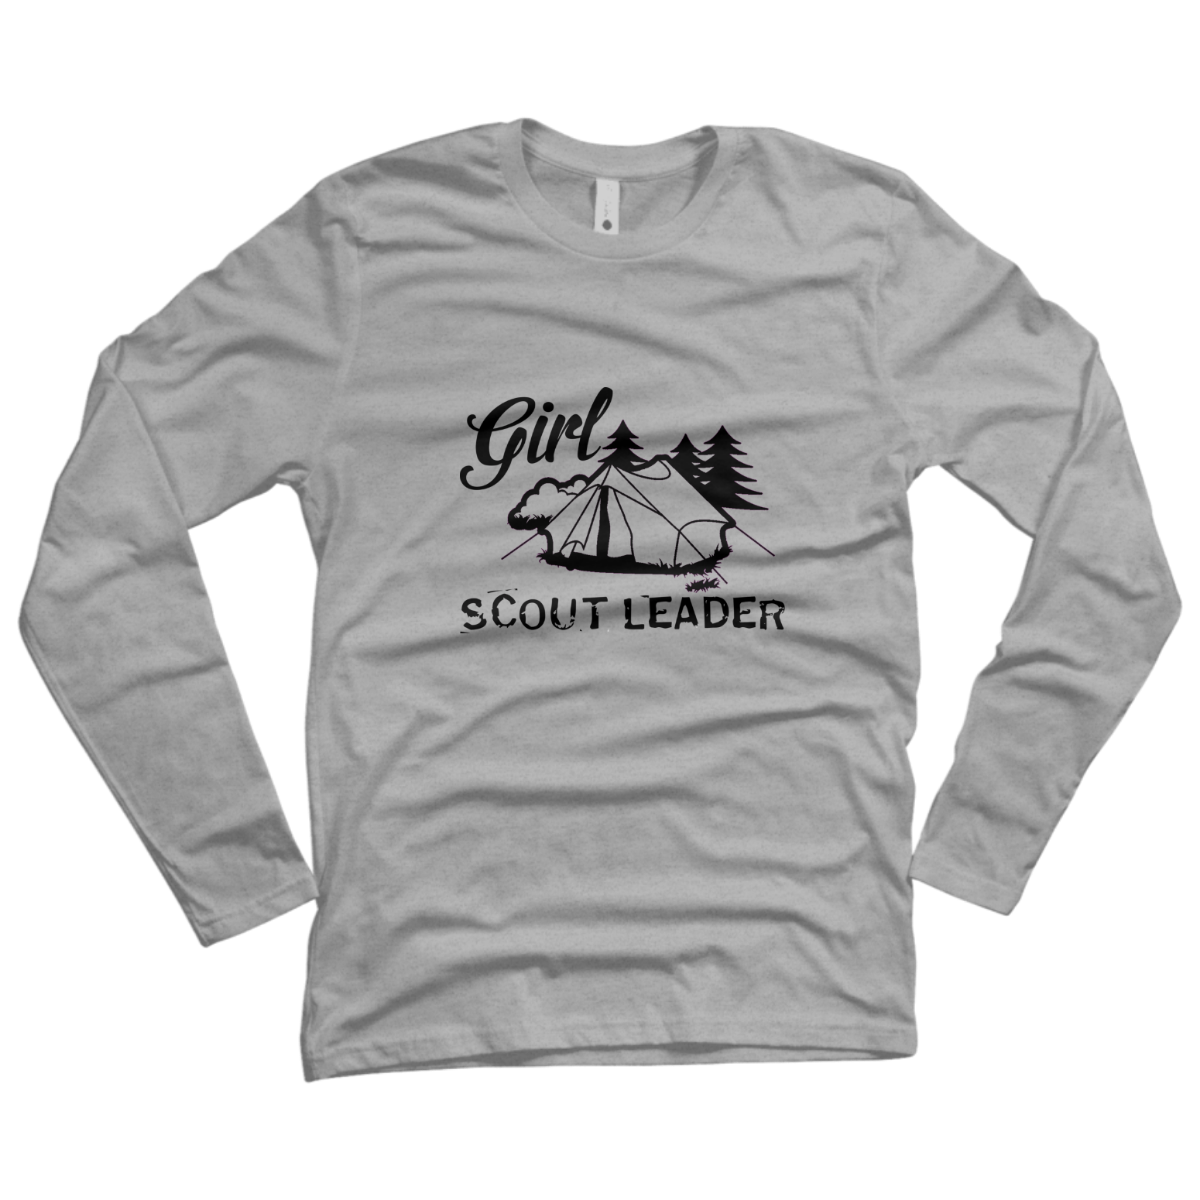 mens girl scout shirt